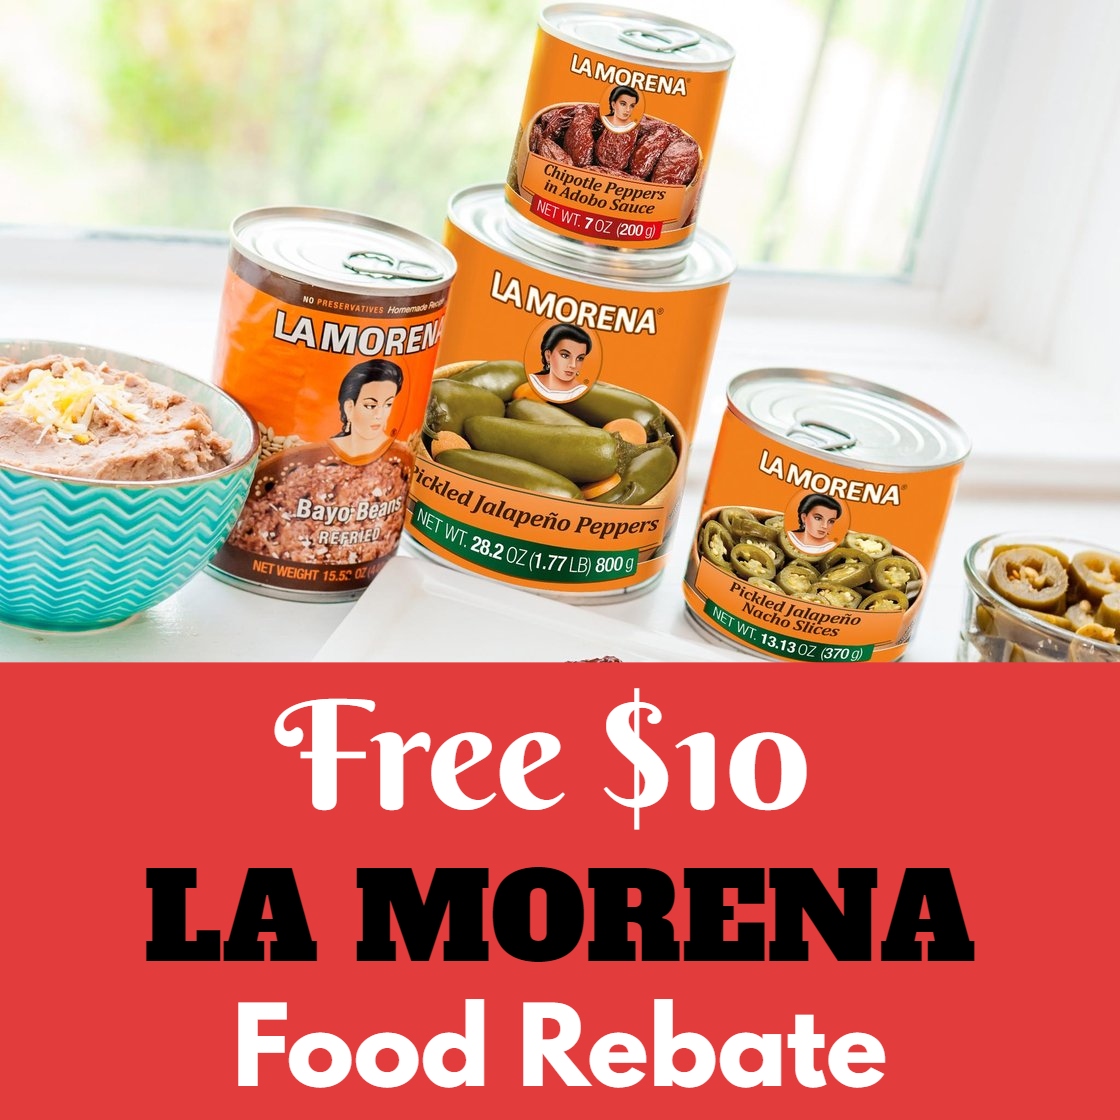 free-10-la-morena-food-cashback-rebate-saving-for-more